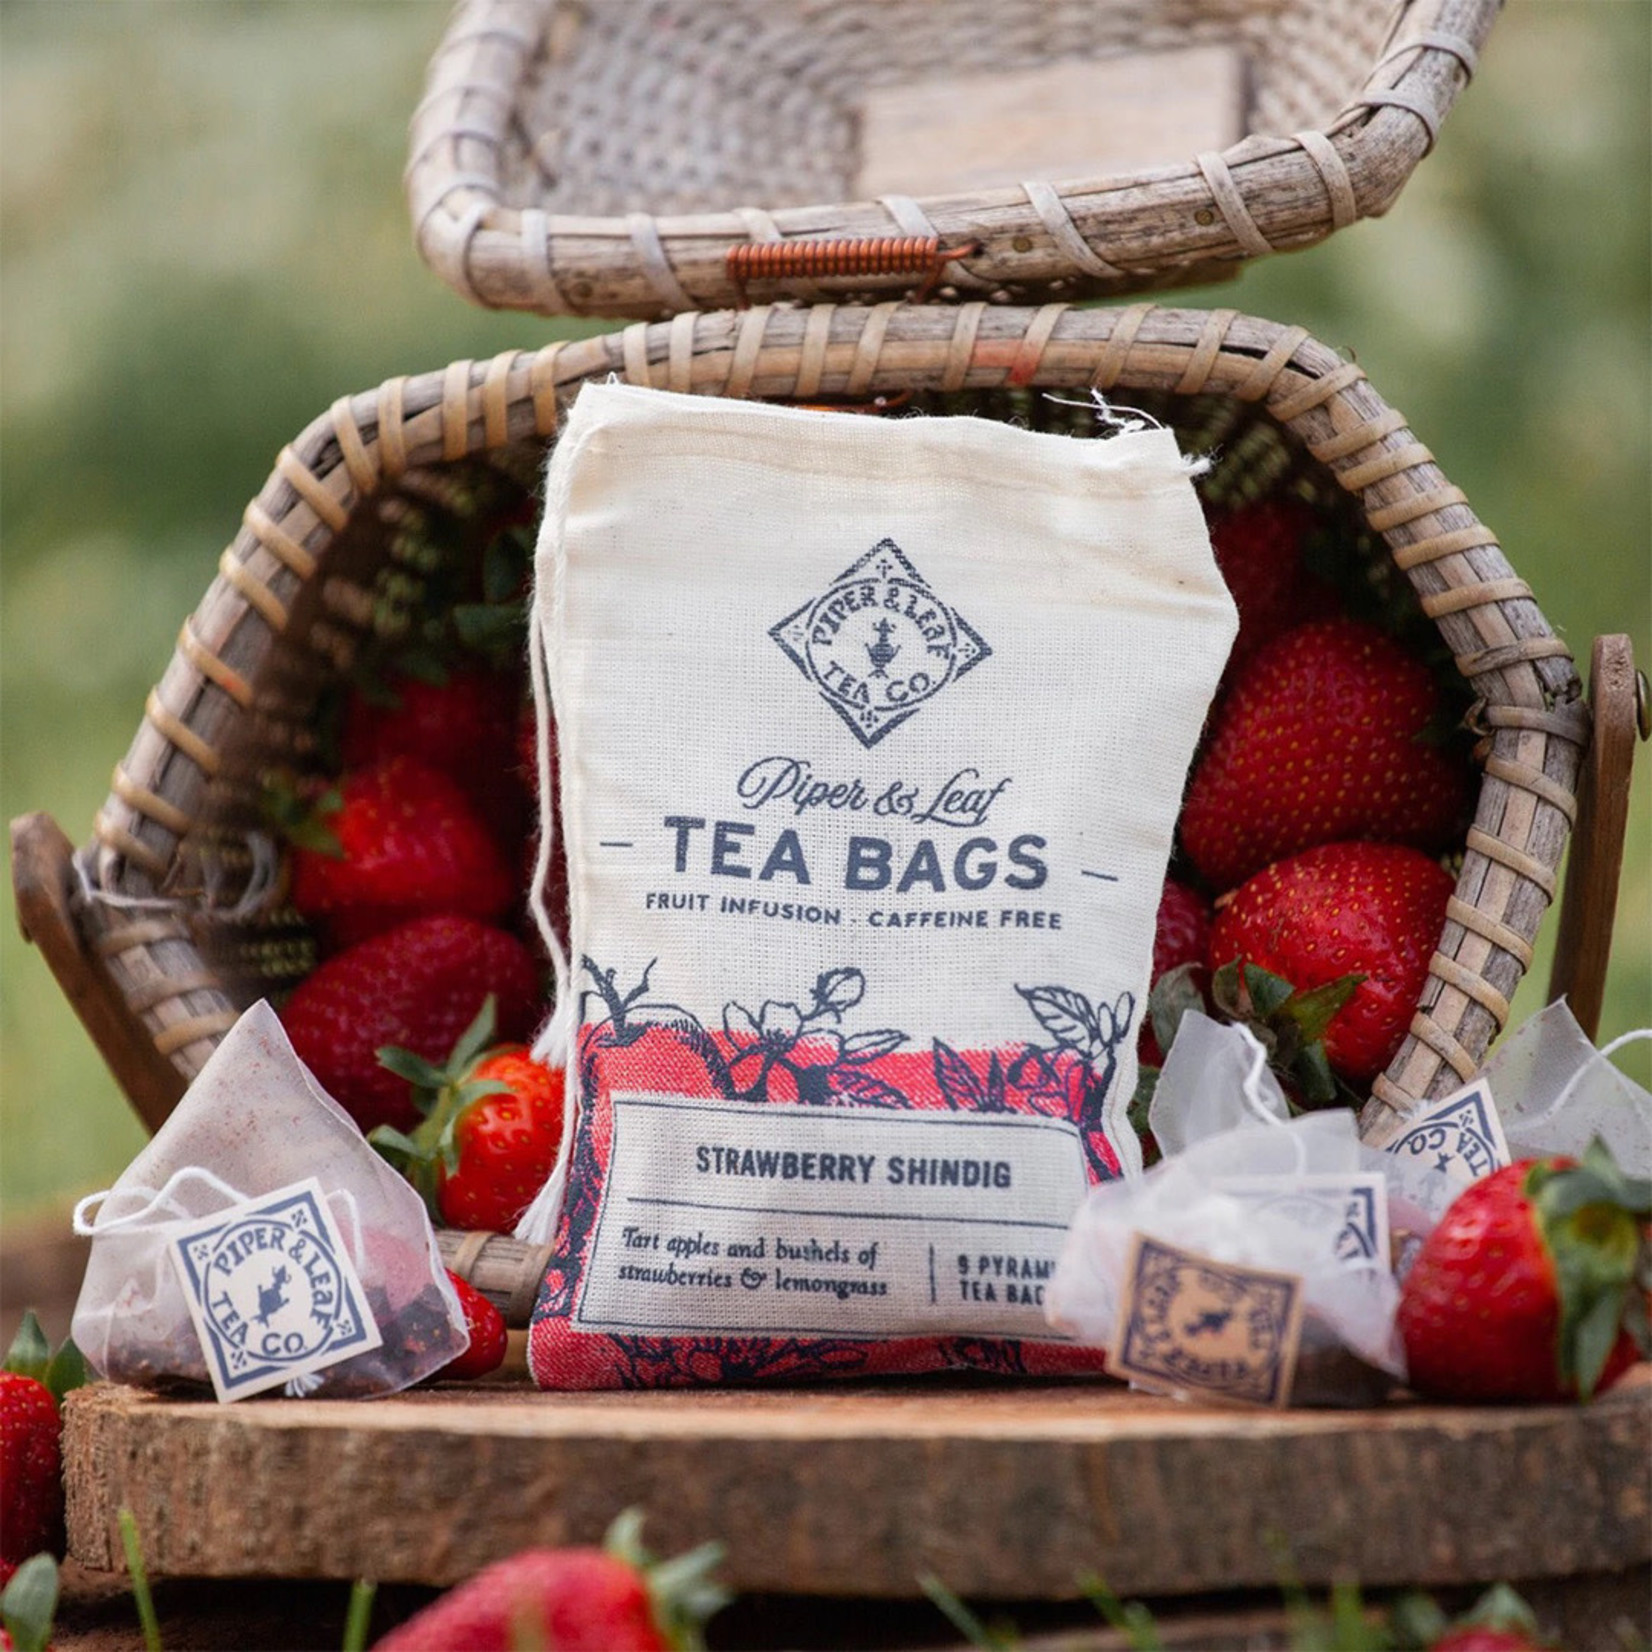 Piper & Leaf Tea Co. Strawberry Shindig Tea Bags in Muslin